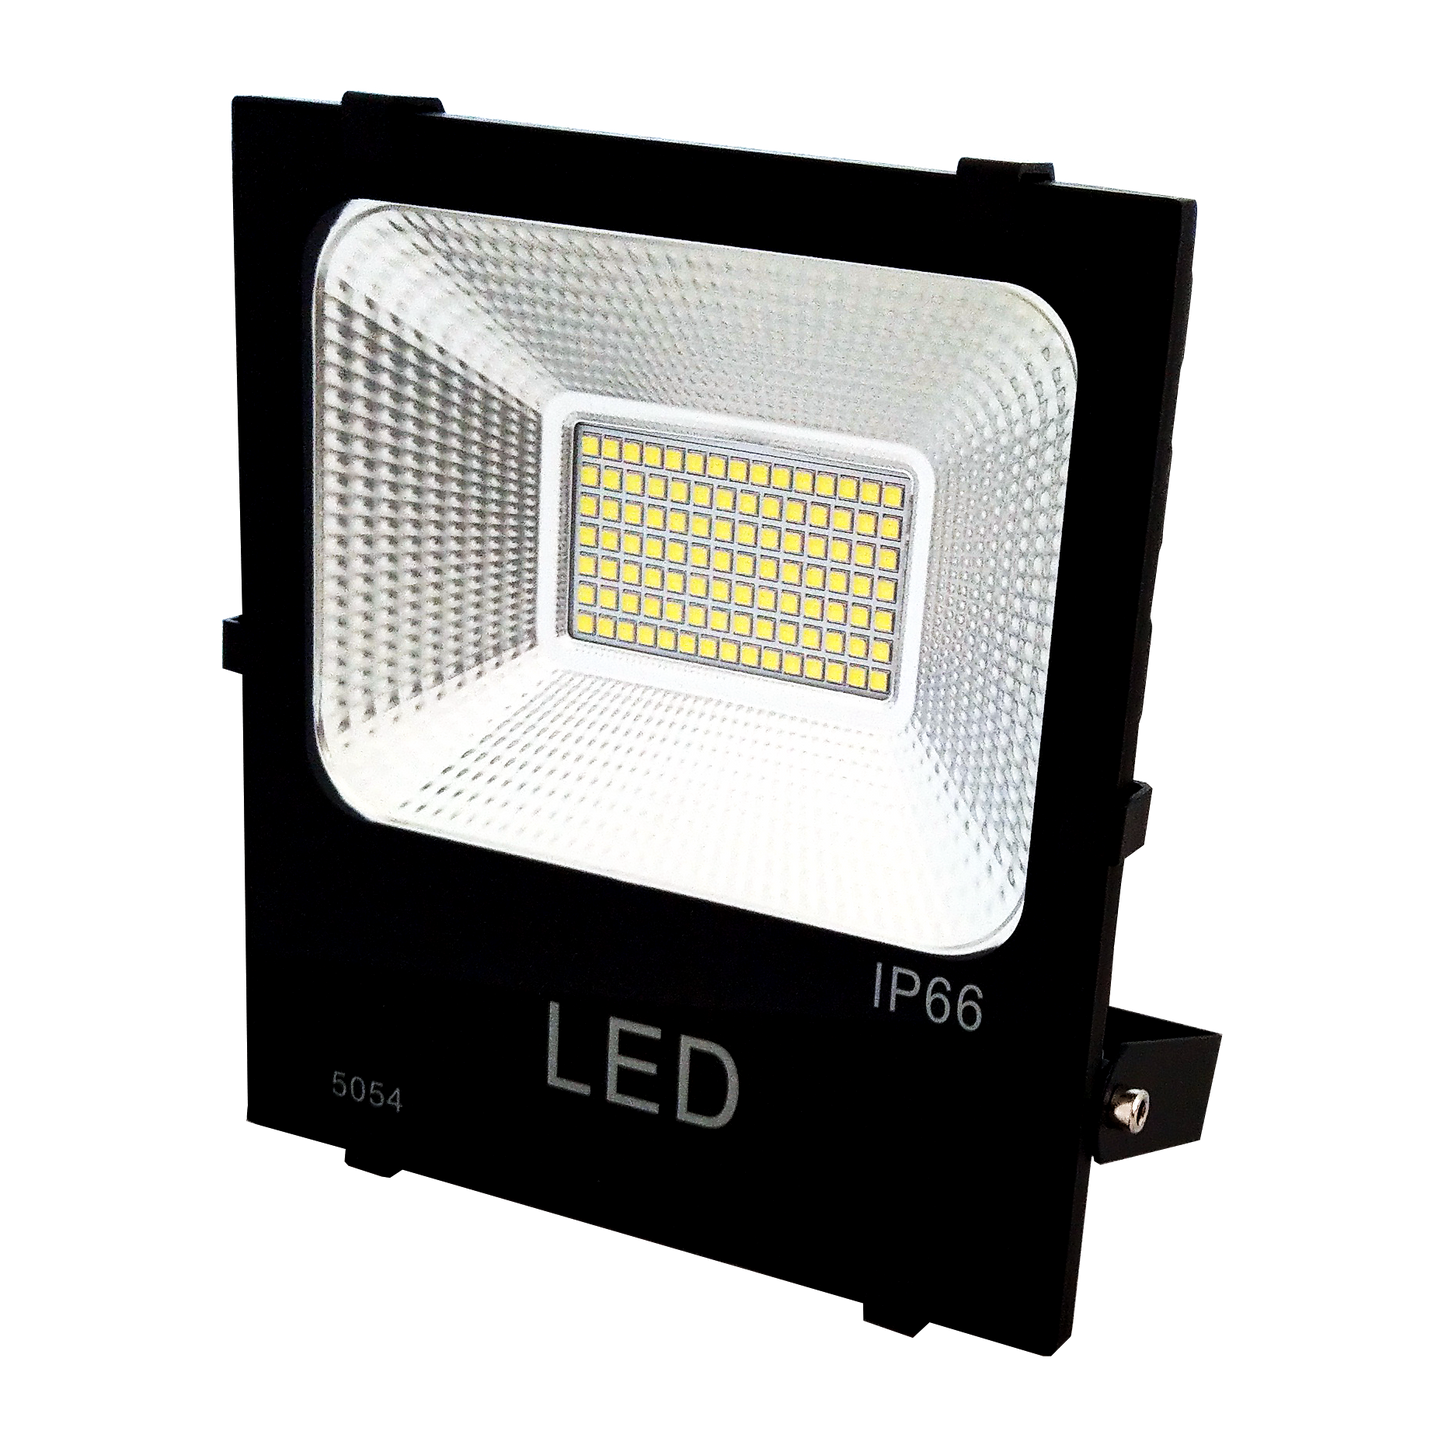 LED 100W SMD超薄投光燈